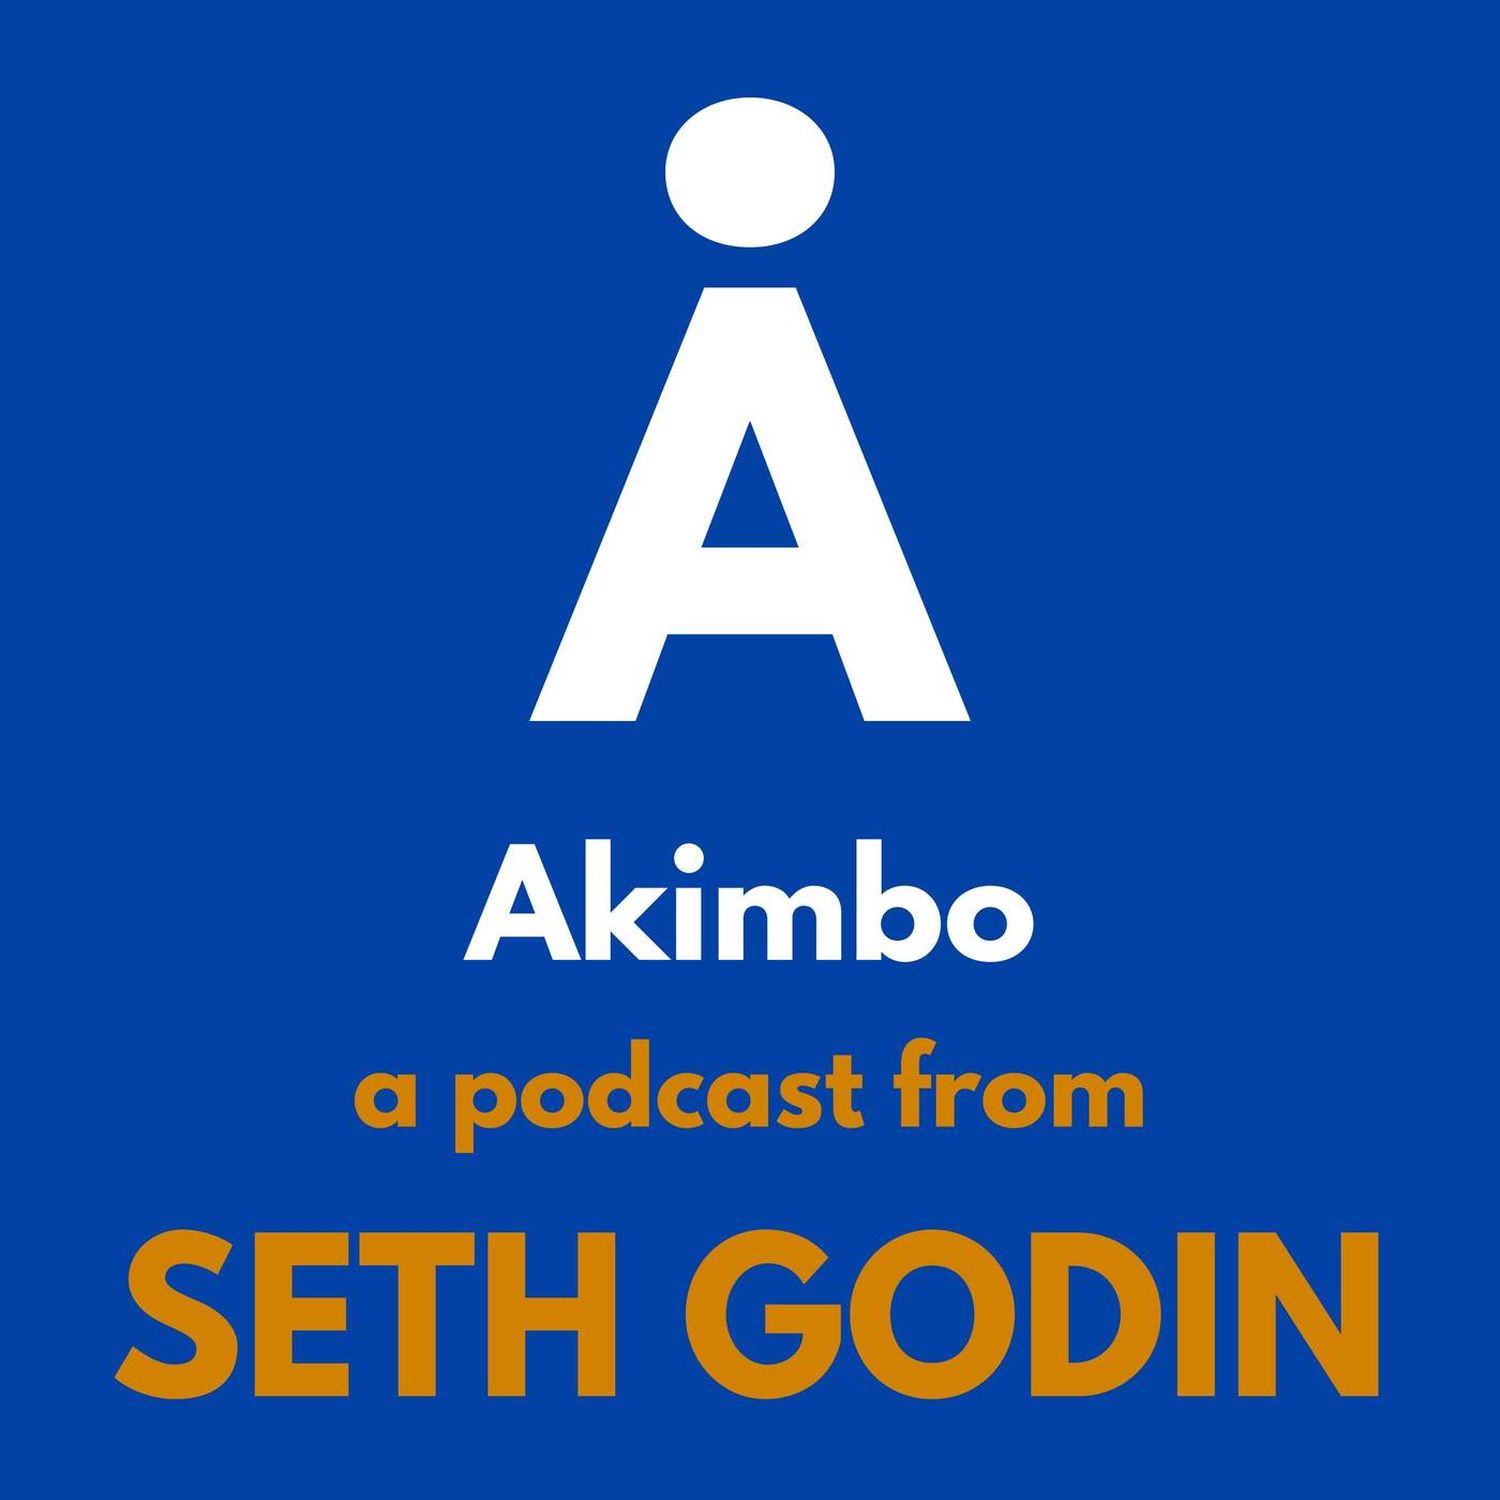 Akimbo: A Podcast from Seth Godin podcast show image